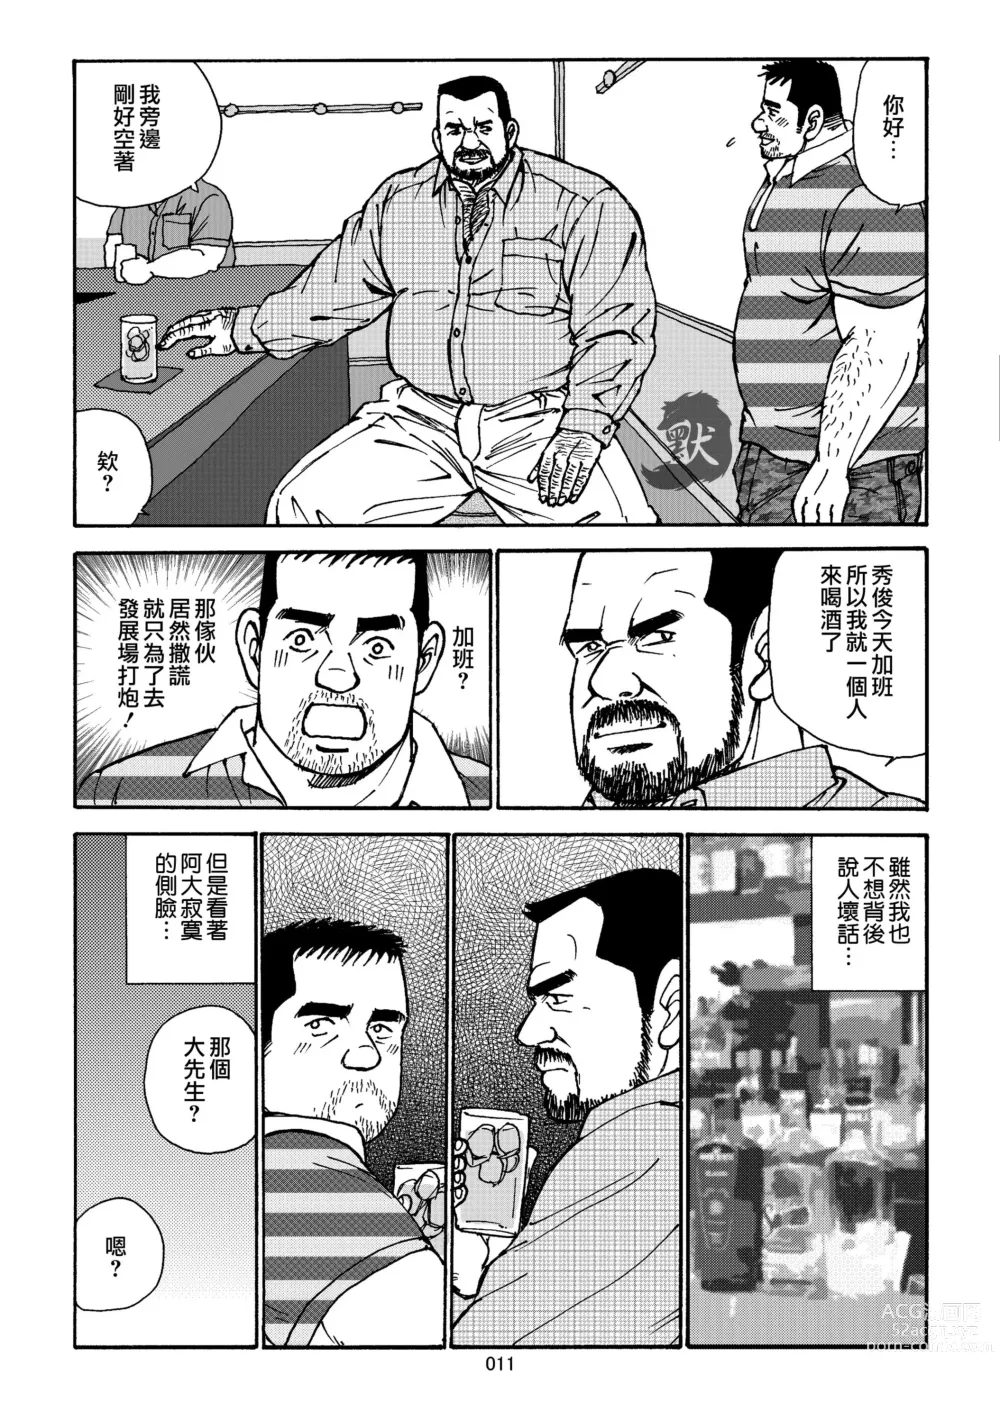 Page 11 of manga おいしい性活